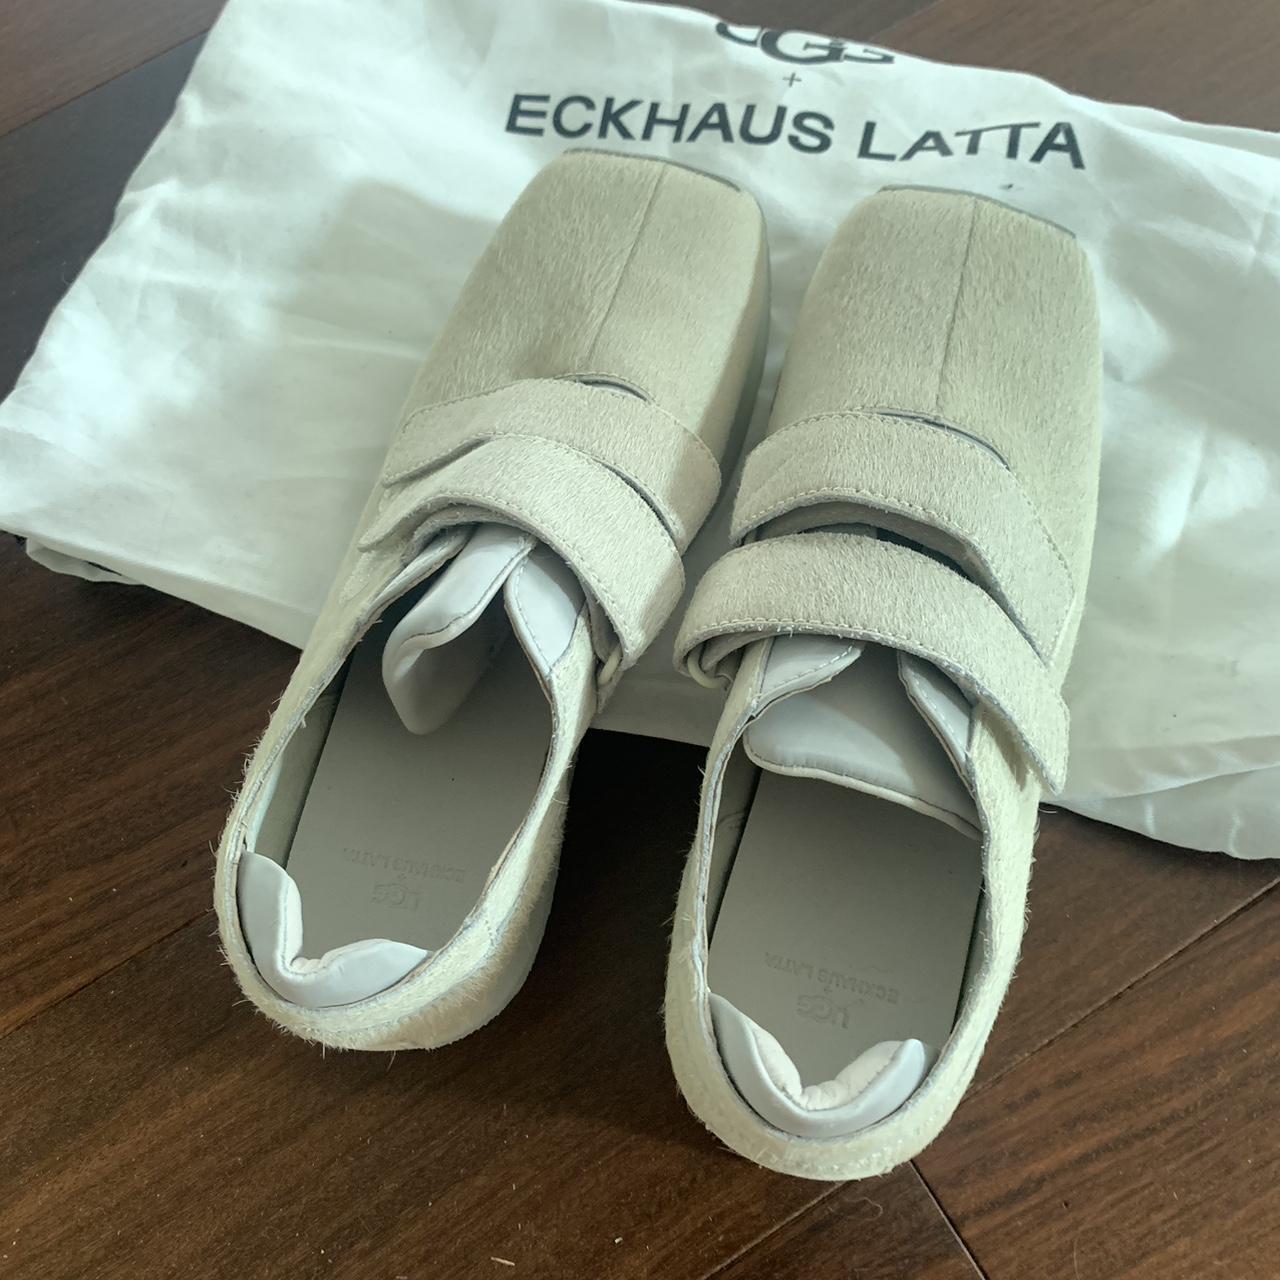 Eckhaus Latta x Uggs calf sneaker in sz 6 These... - Depop